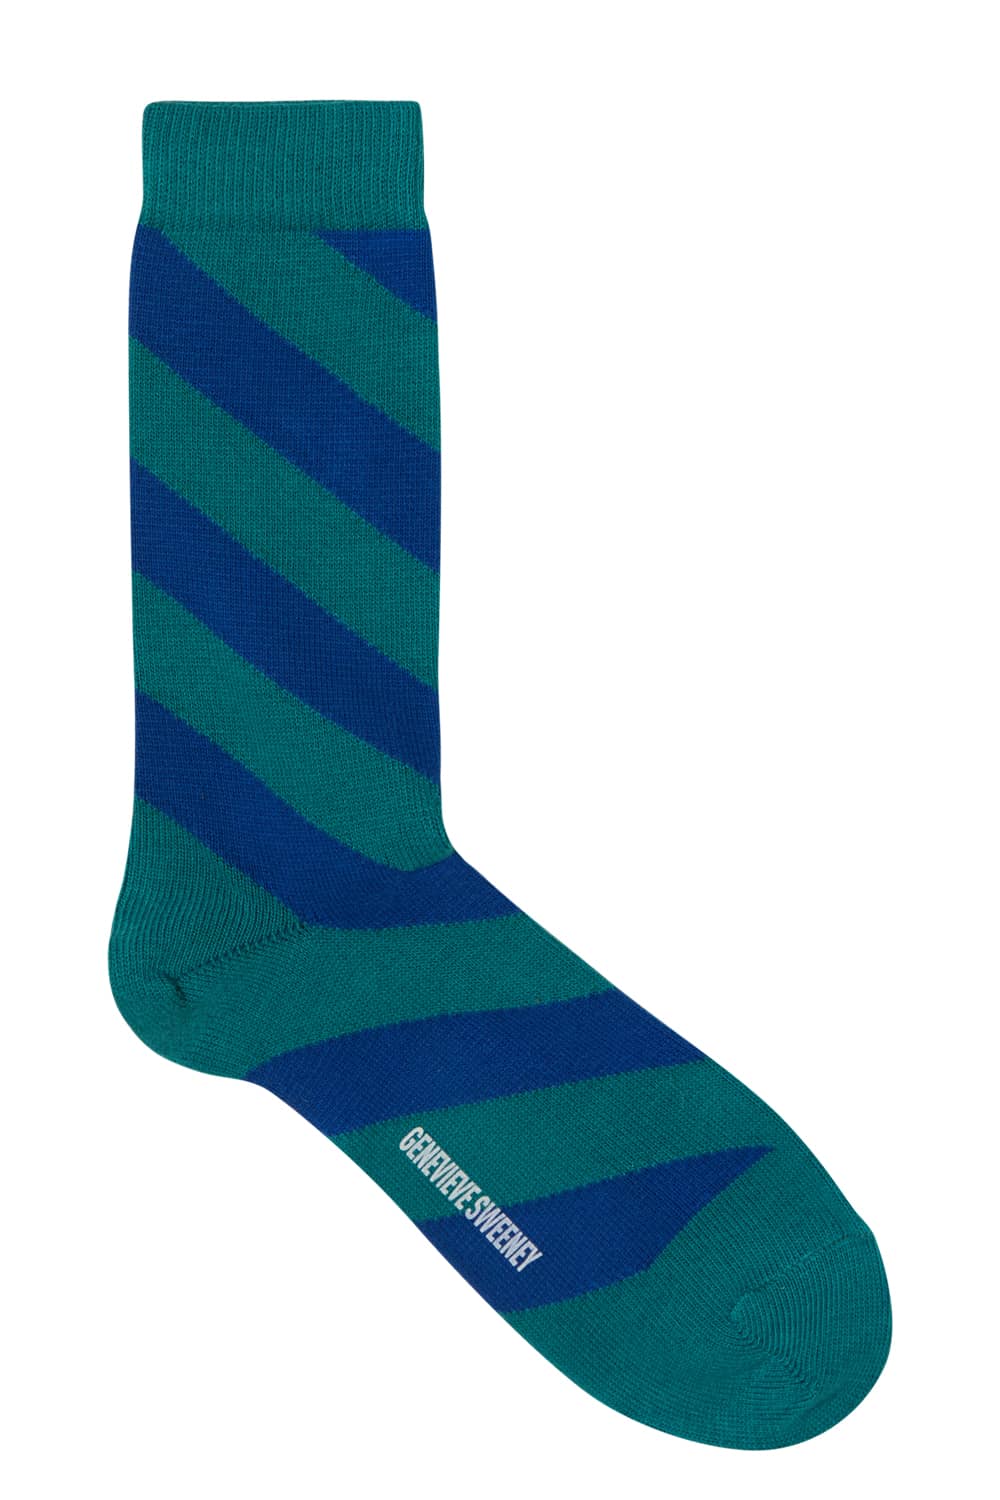 Unisex Luxury Striped Socks | Teal & Blue Stripe | British Made